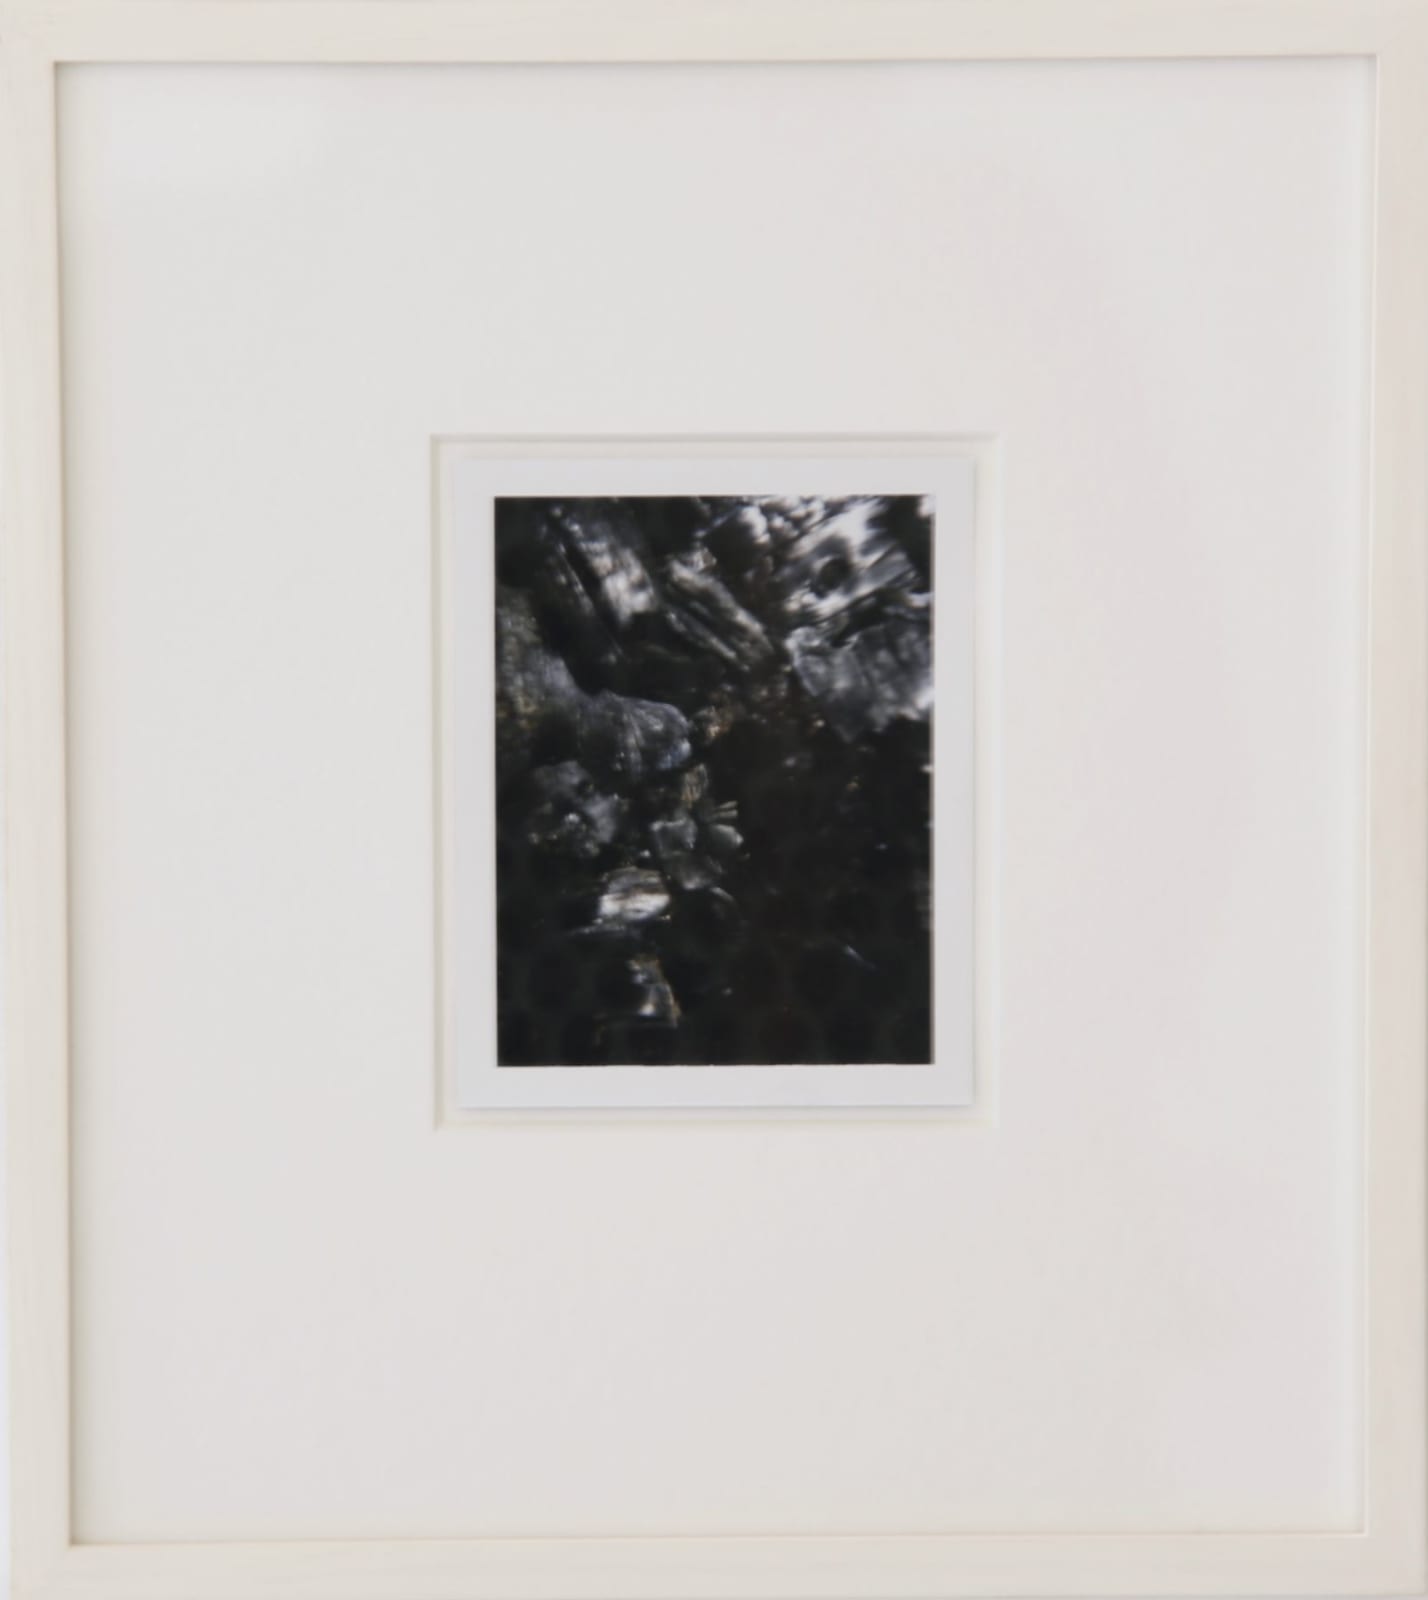 Robert Beck, Untitled (Rossy Camp, Mount Desert Island, Maine, 8/23/99), 1999